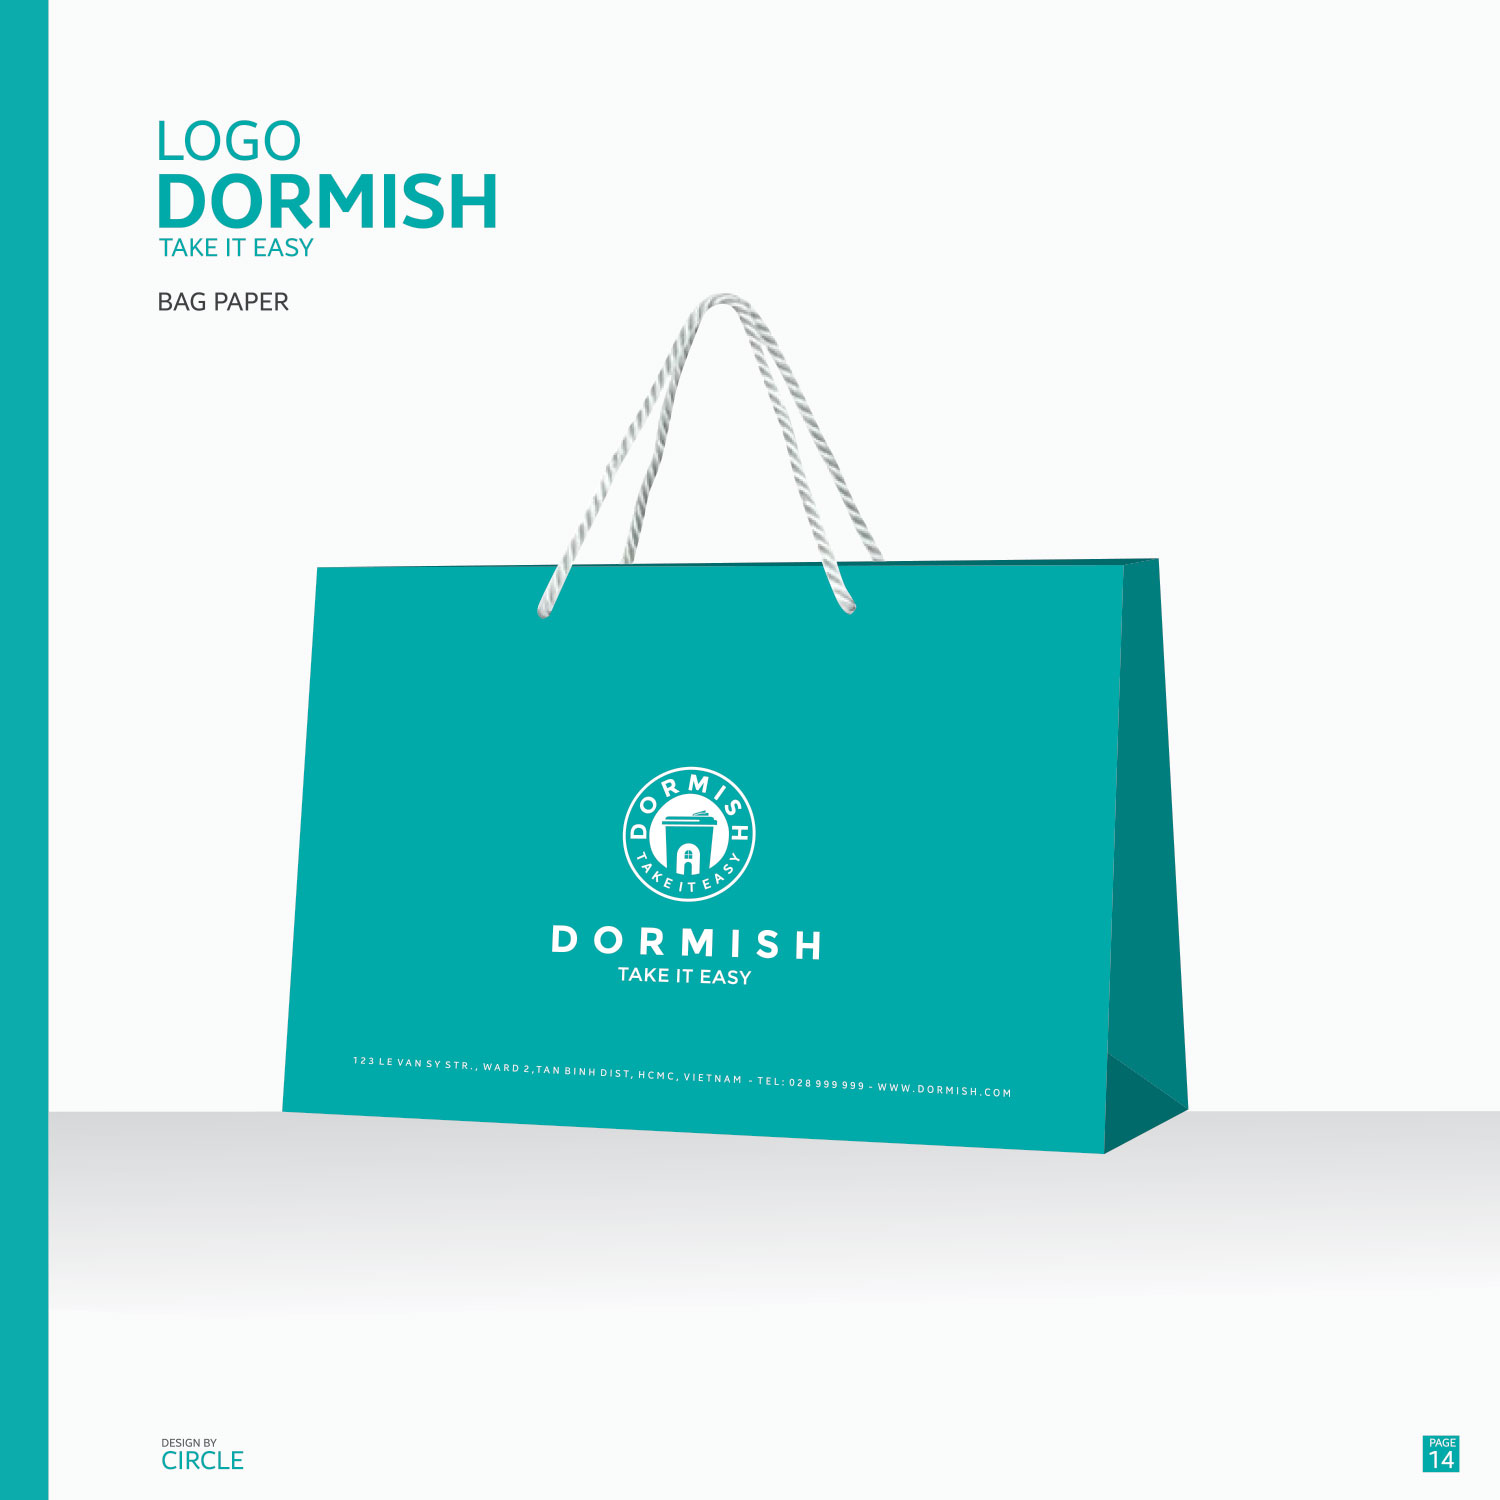 LOGO-DORMISH-FINAL-15.04-3